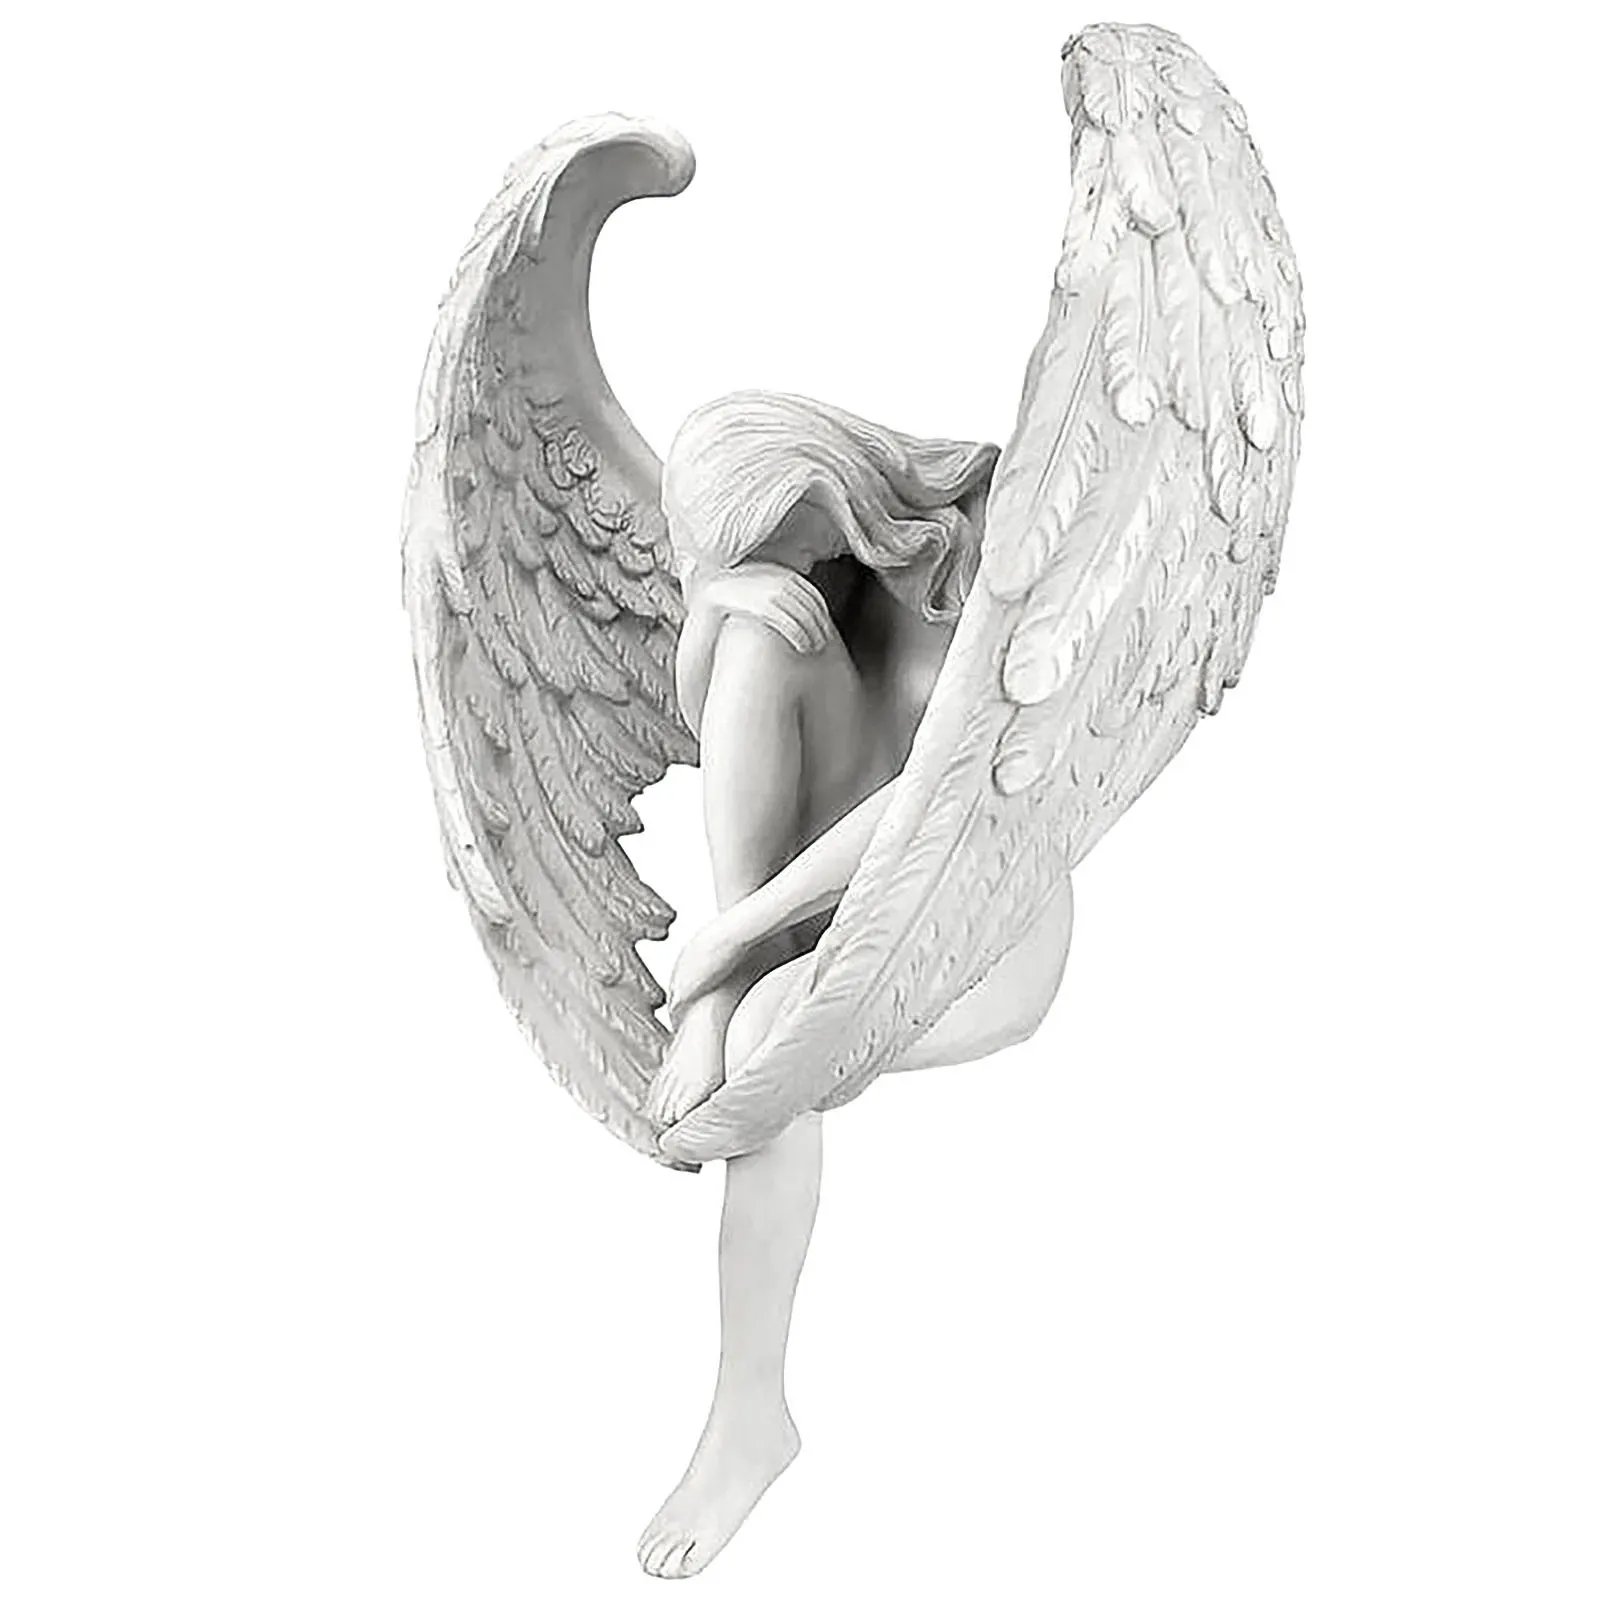 MK Hot-selling European-style angel Resin craft ornaments Garden statue hug legs angel Home wall decoration